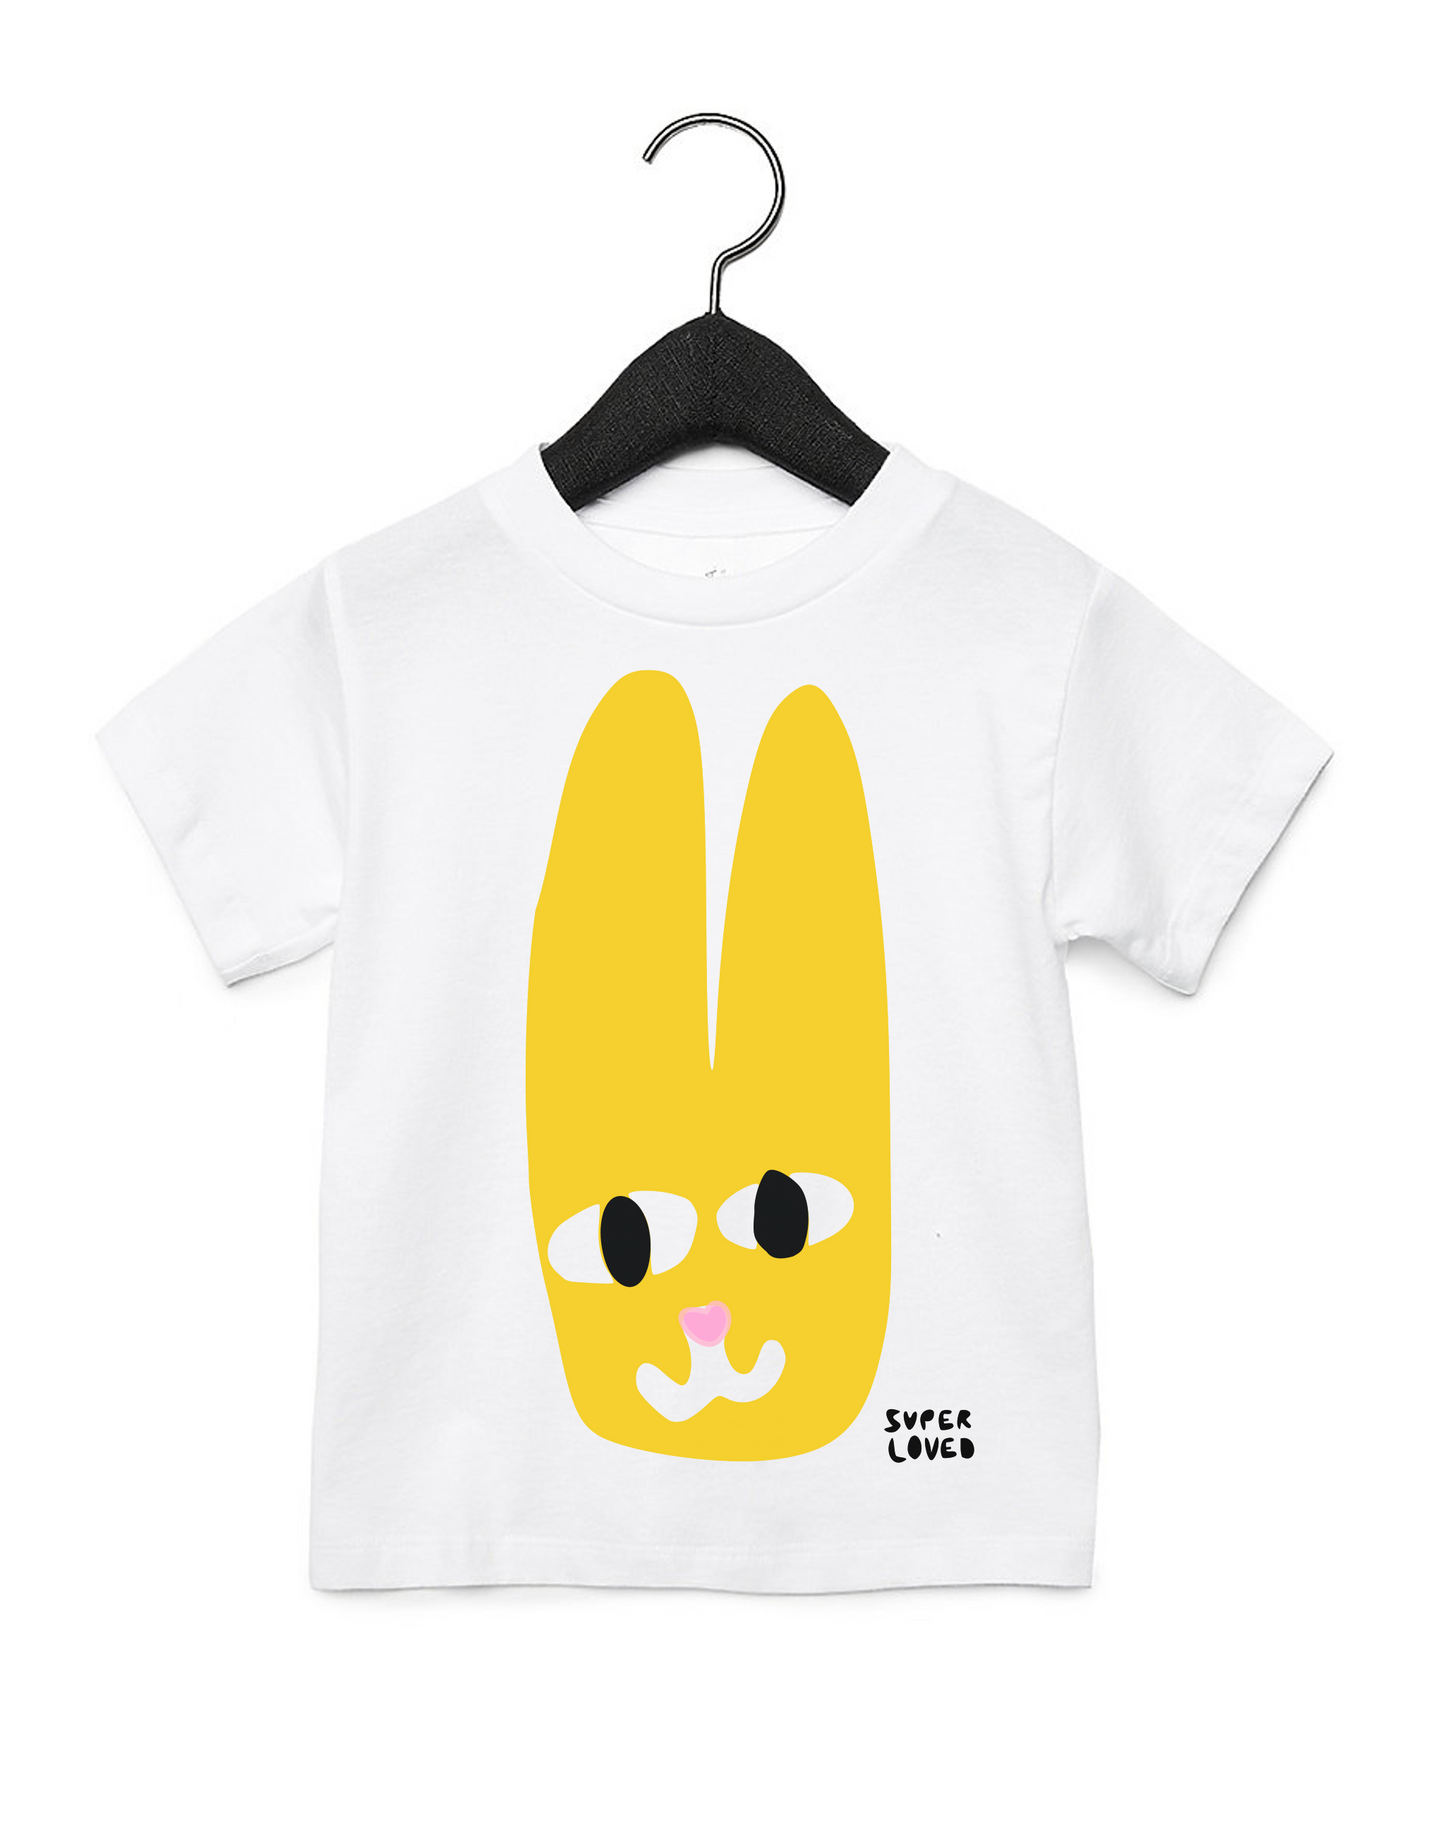 SUPER LOVED- Toki Bunny Kids T-Shirt